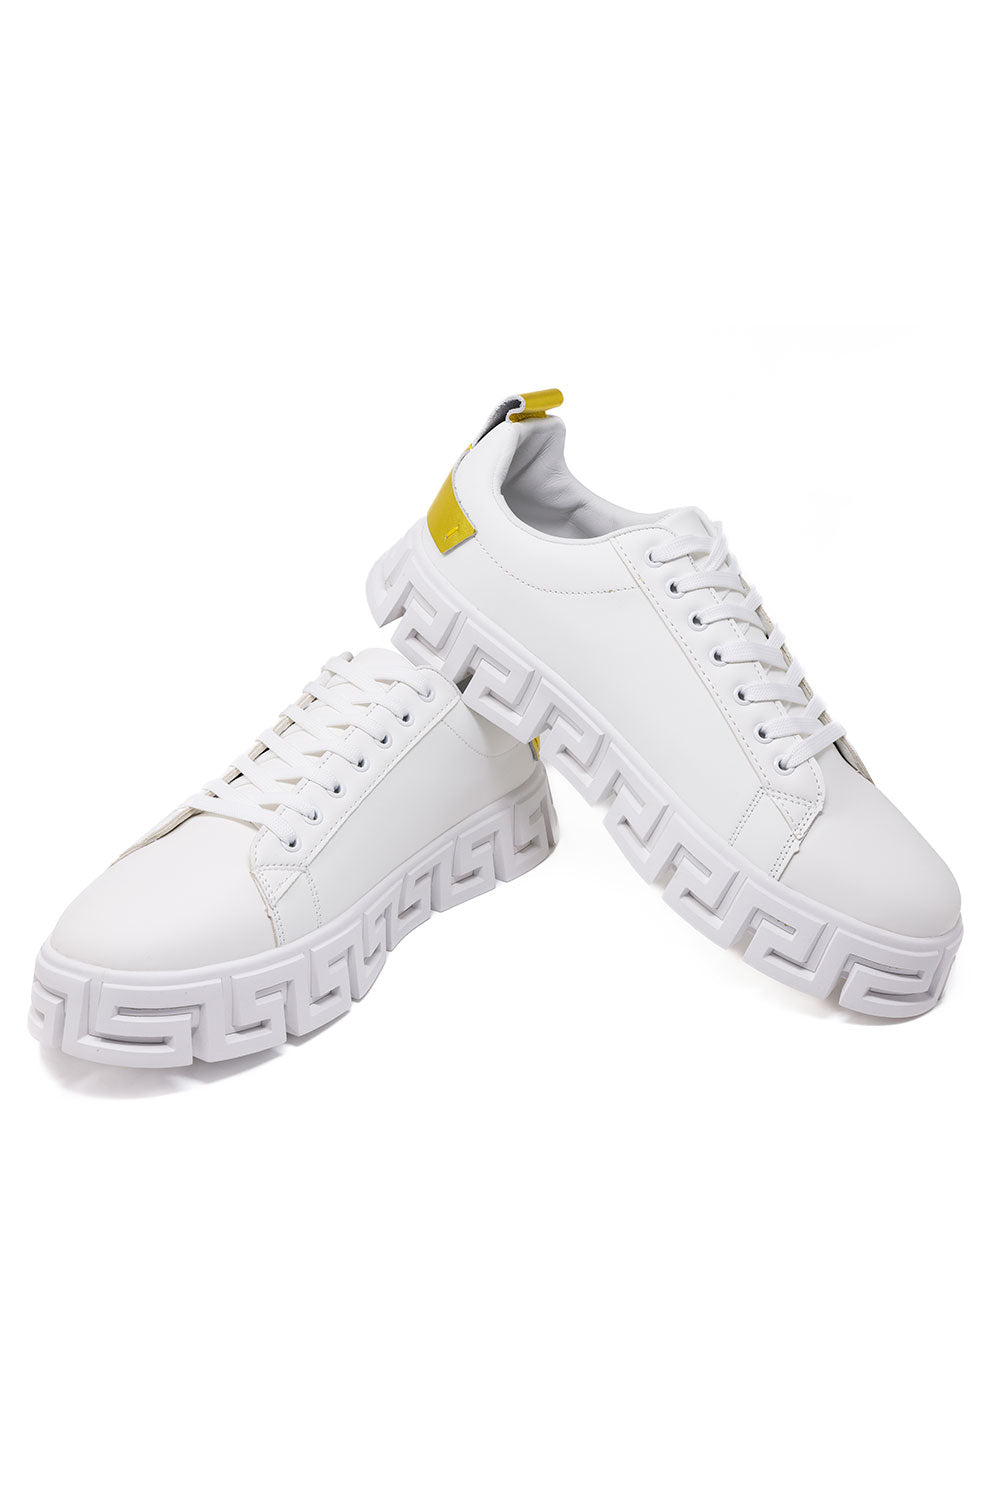 Barabas Men's Greek Key Sole Pattern Premium Sneakers 4SK06 White gold